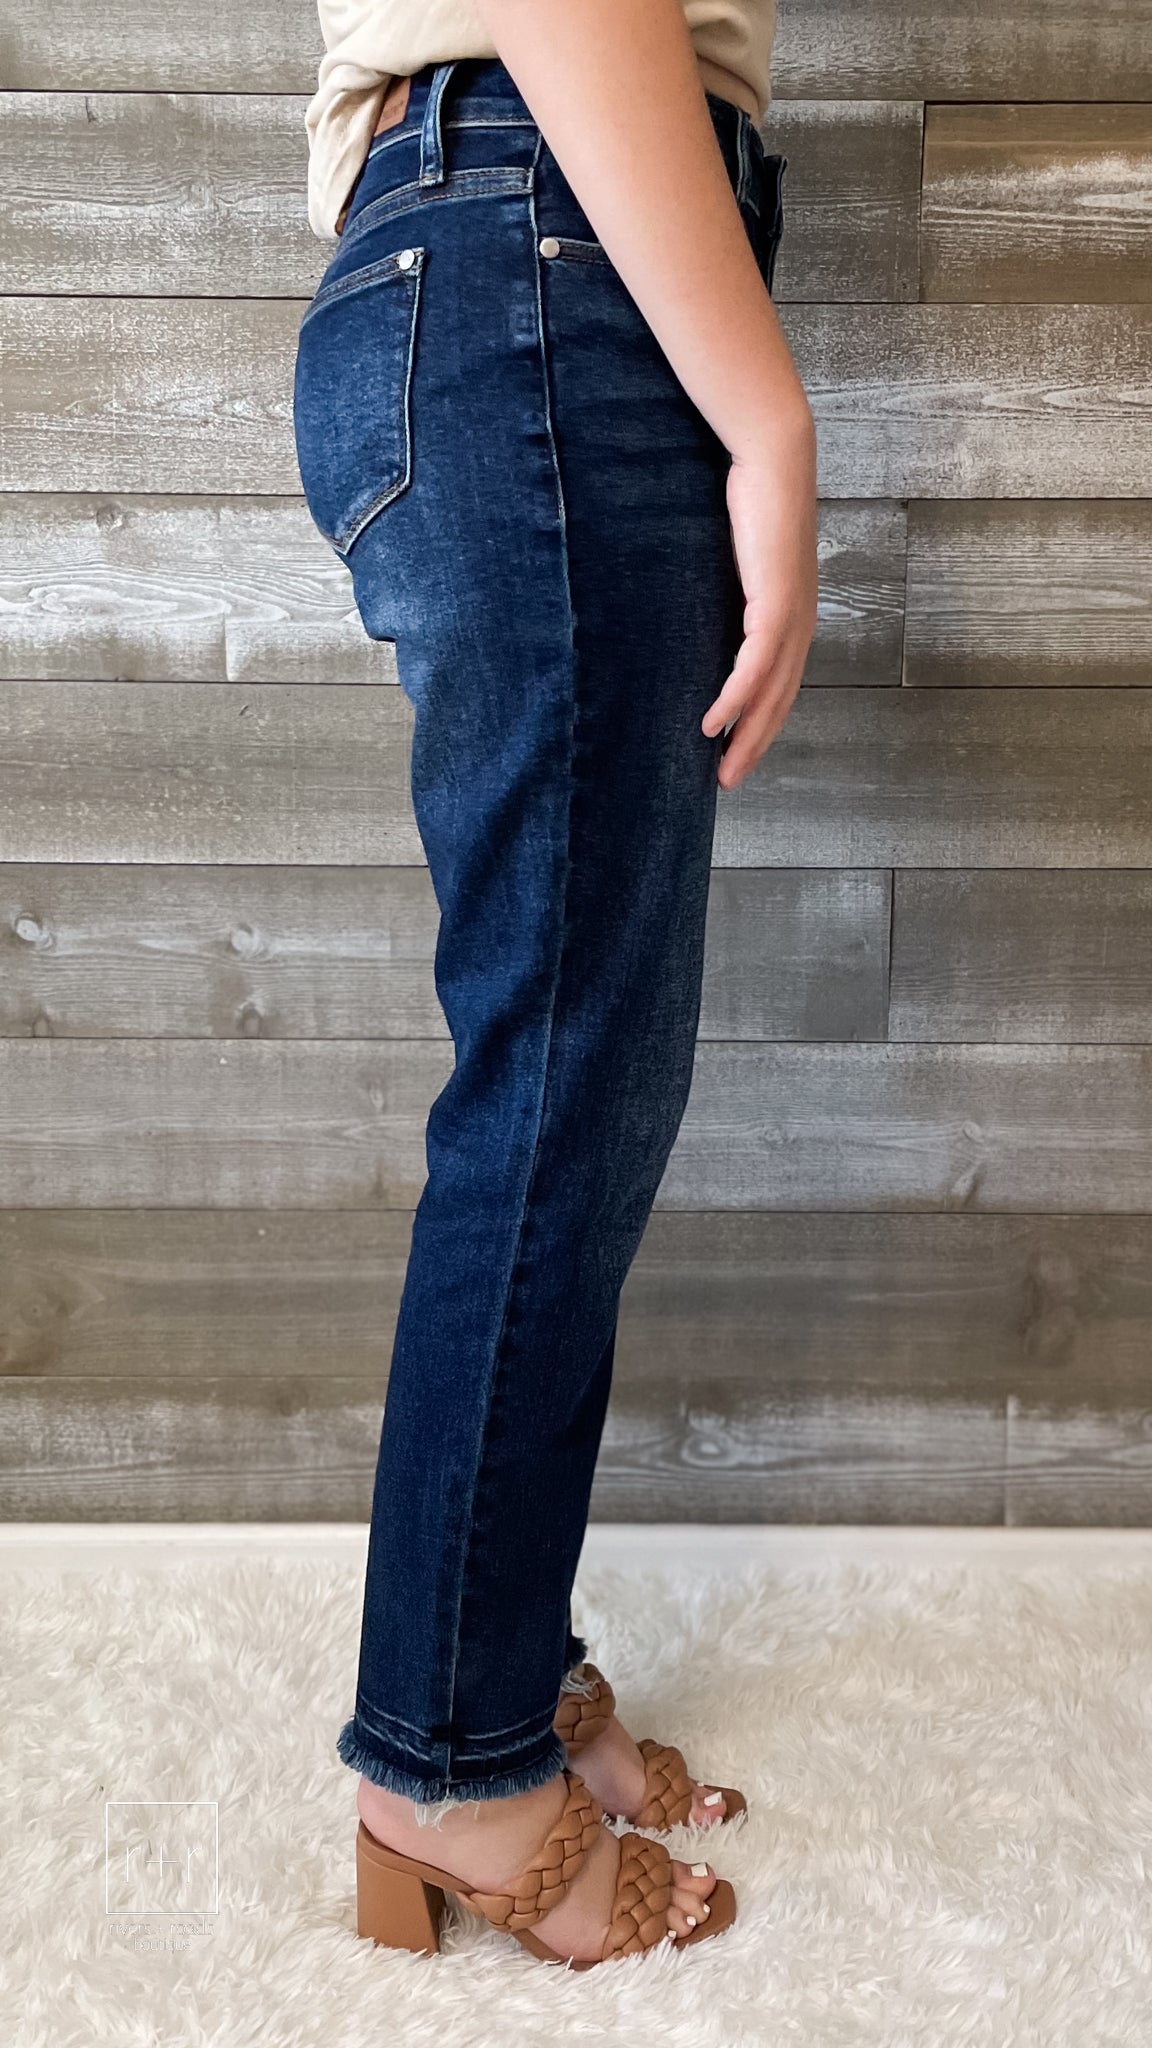 judy blue high waist slim fit dark wash jeans released hem JB88704 DK